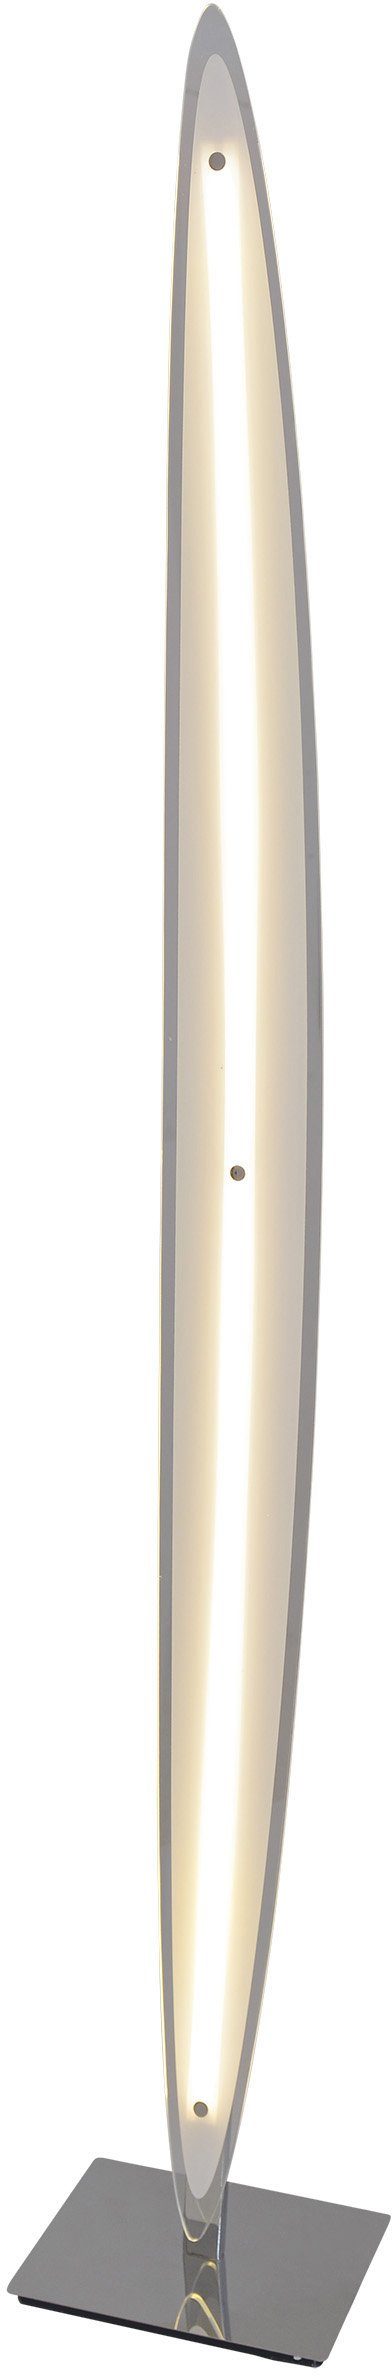 Surf, "Surf",dimmbar, Warmweiß, 29W 1850lm LED total Stehleuchte 144 3000K; Stehlampe inkl. fest näve LED´s Dimmfunktion, integriert, LED